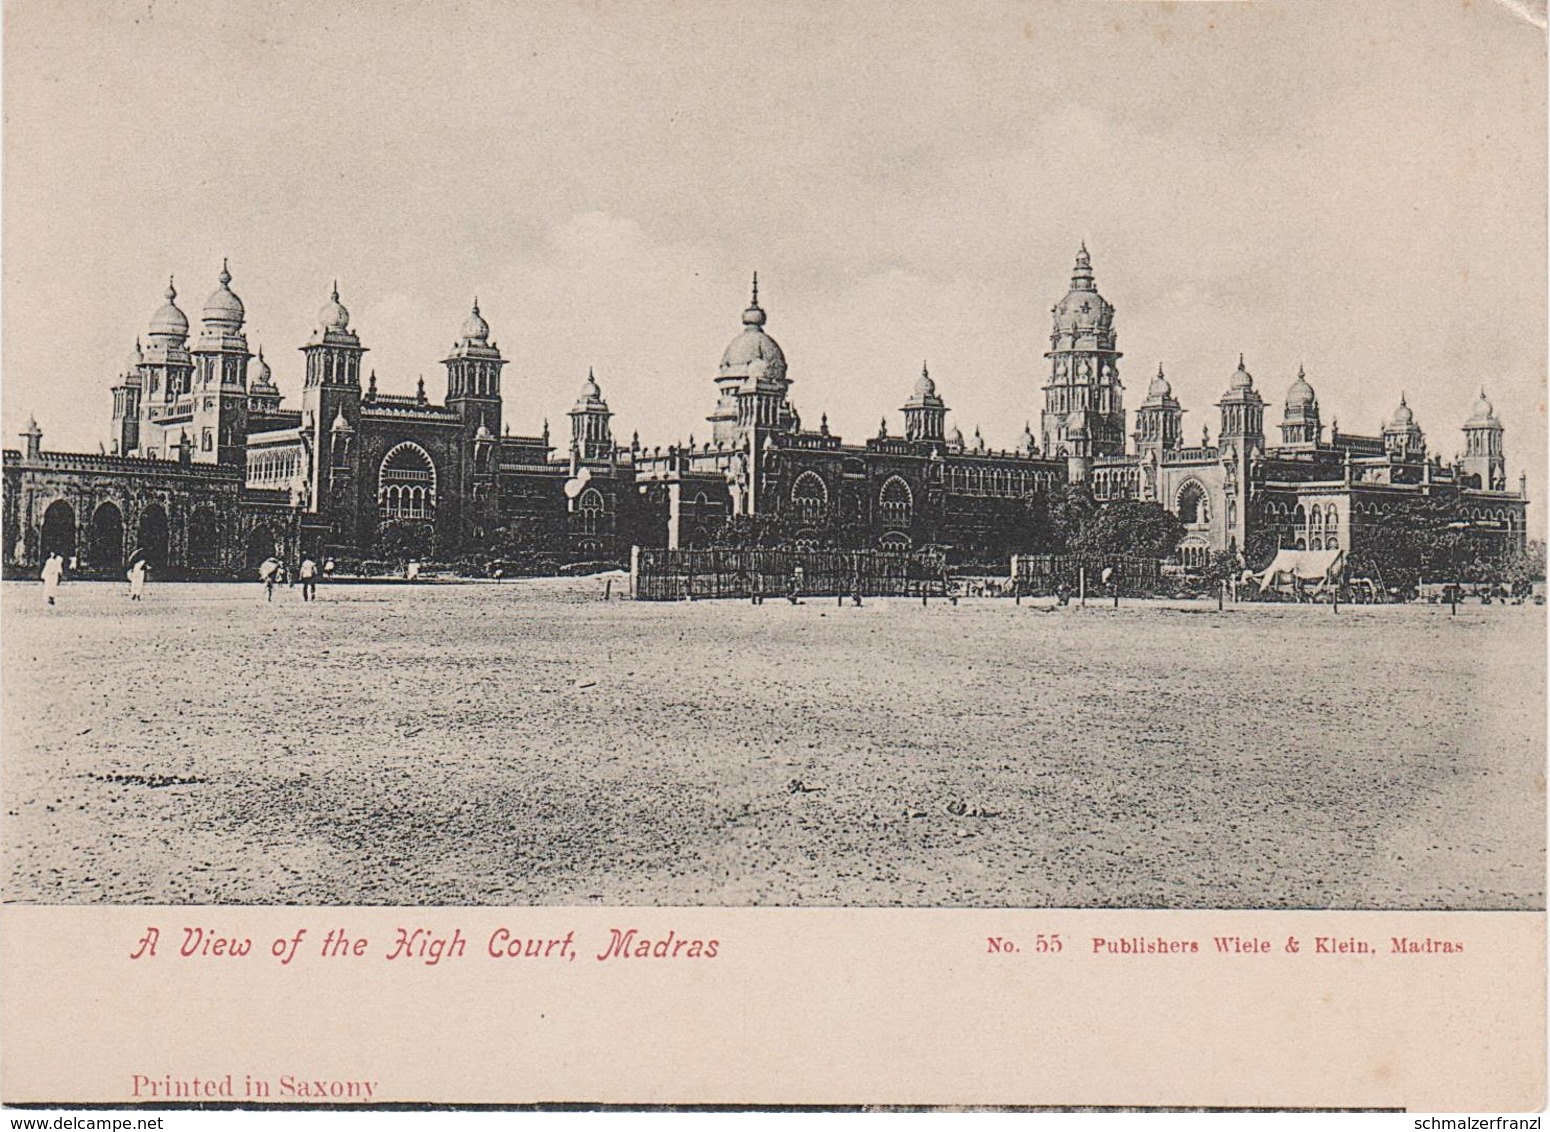 AK Madras Chennai சென்னை மெட்ராஸ் மதராஸ் High Court Tamil Nadu தமிழ் நாடு Indien British India Inde Indie भारत गणराज्य - India